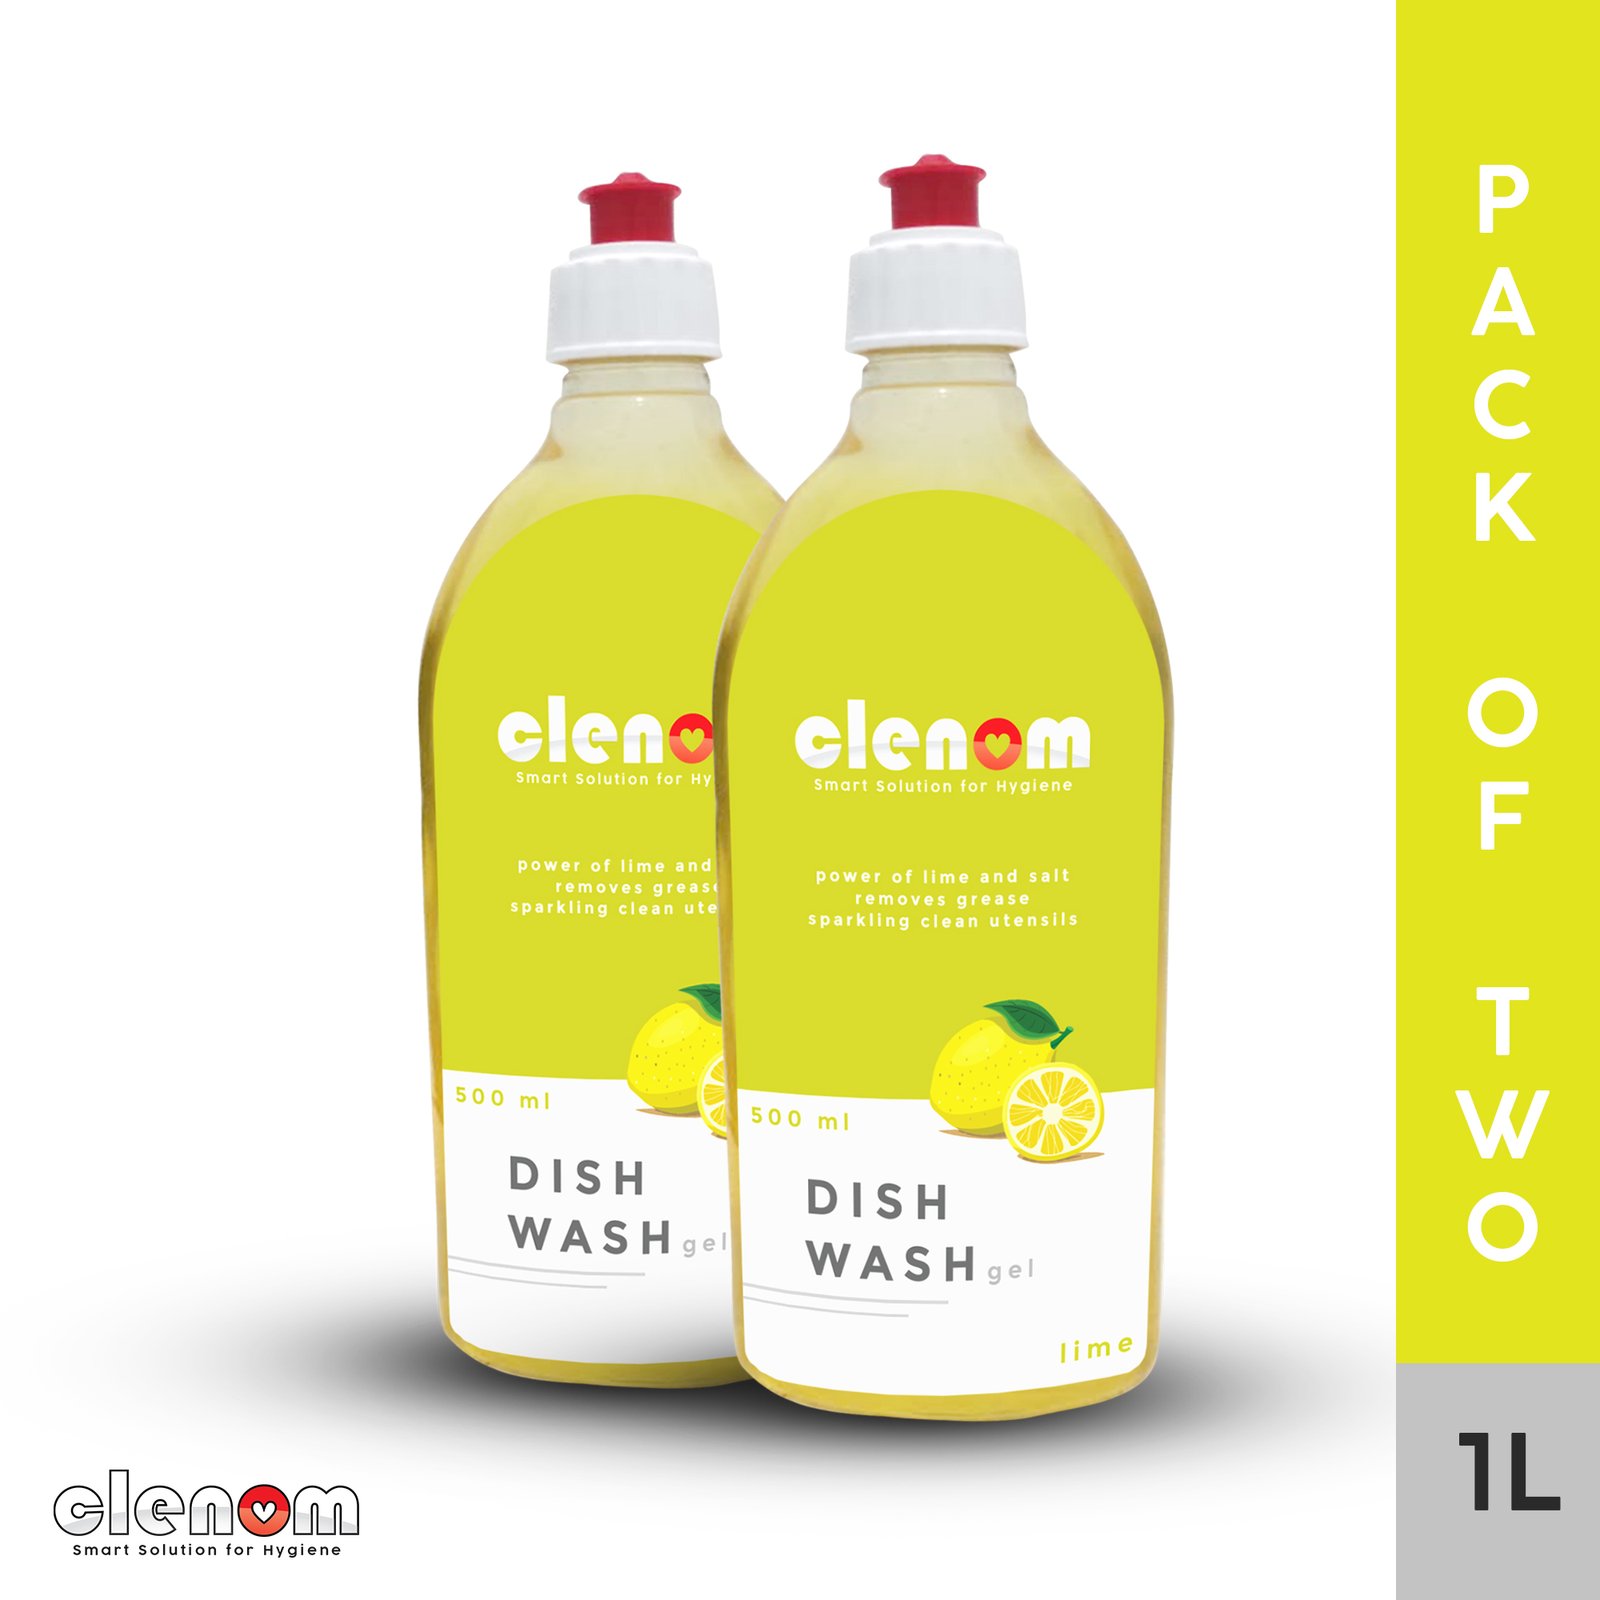 Clenom Dishwash Gel 1L (pack of 2), Each 500 ml